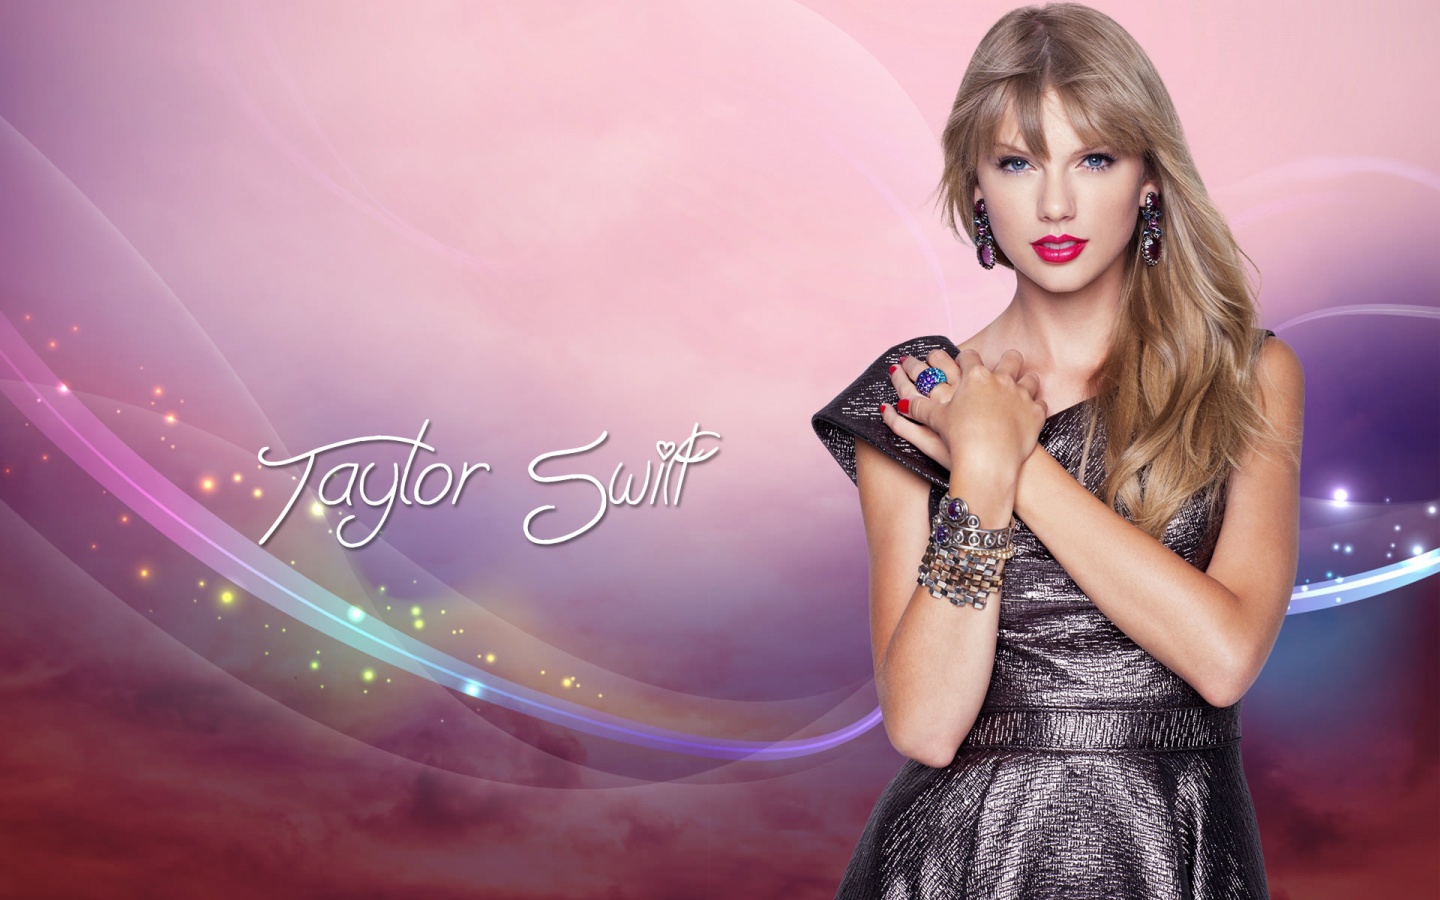 73+] Taylor Swift Backgrounds - WallpaperSafari